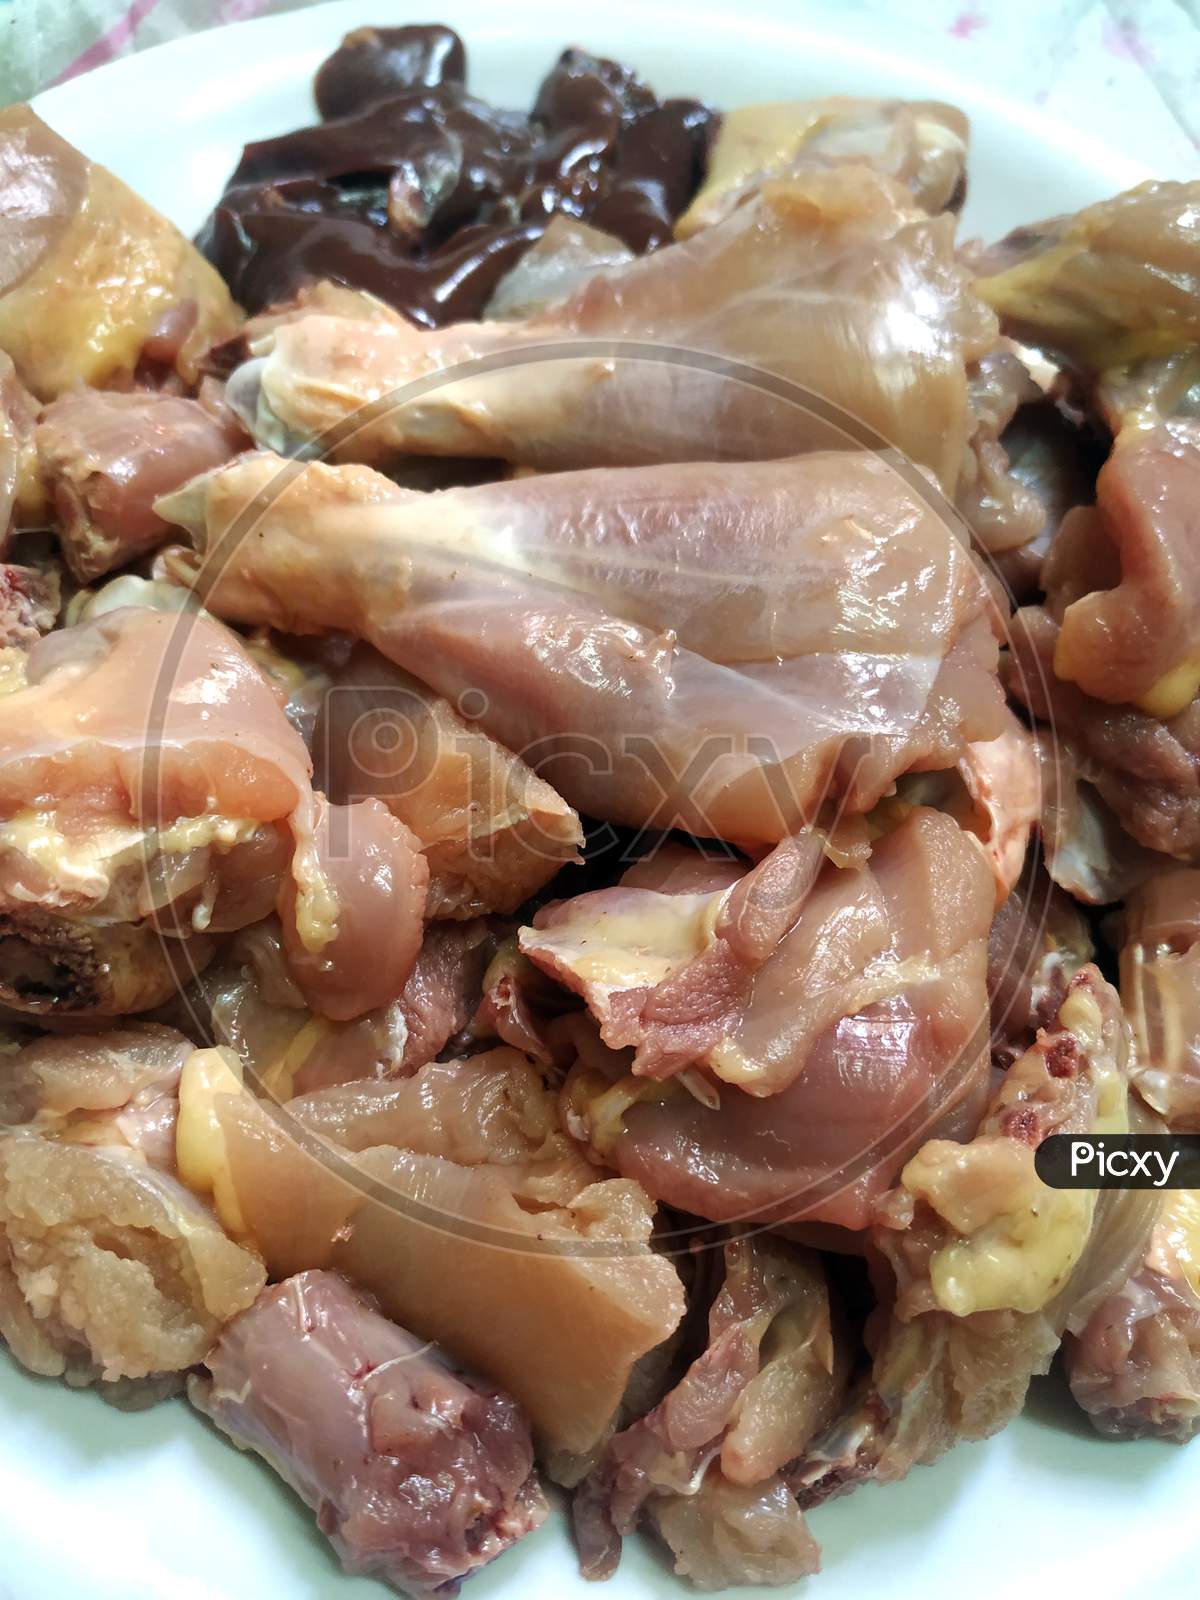 Raw chicken meat cuts